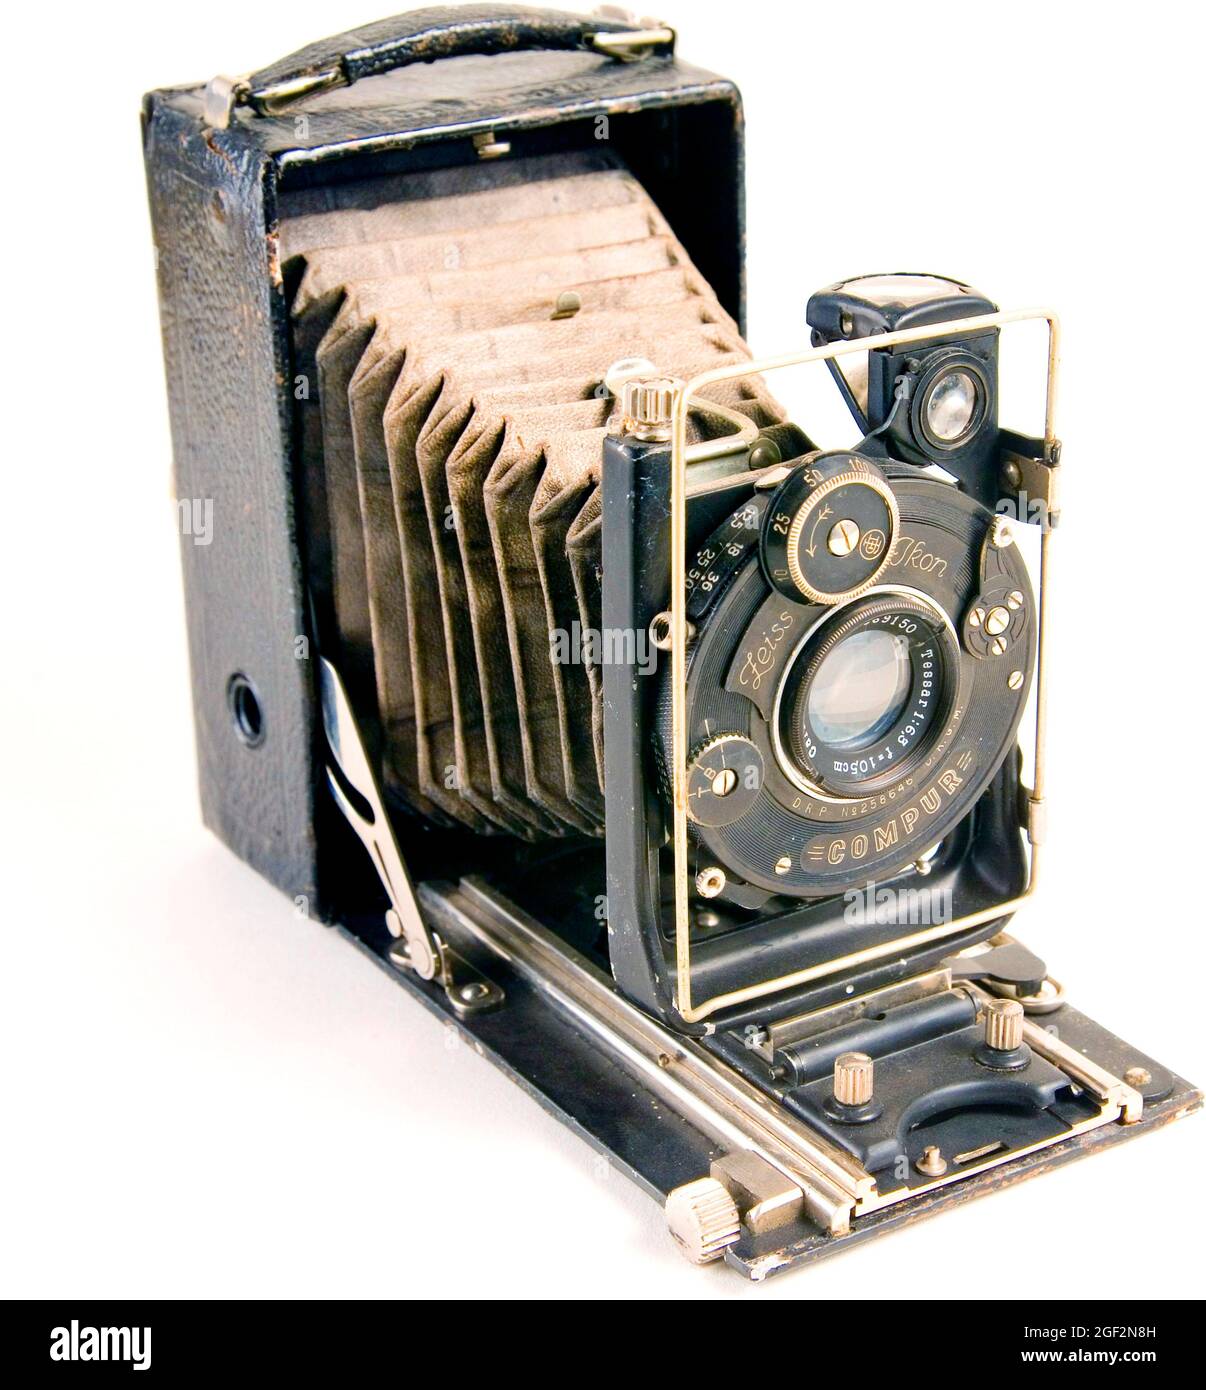 Vecchia macchina fotografica, Zeiss Ikon Compur Foto stock - Alamy